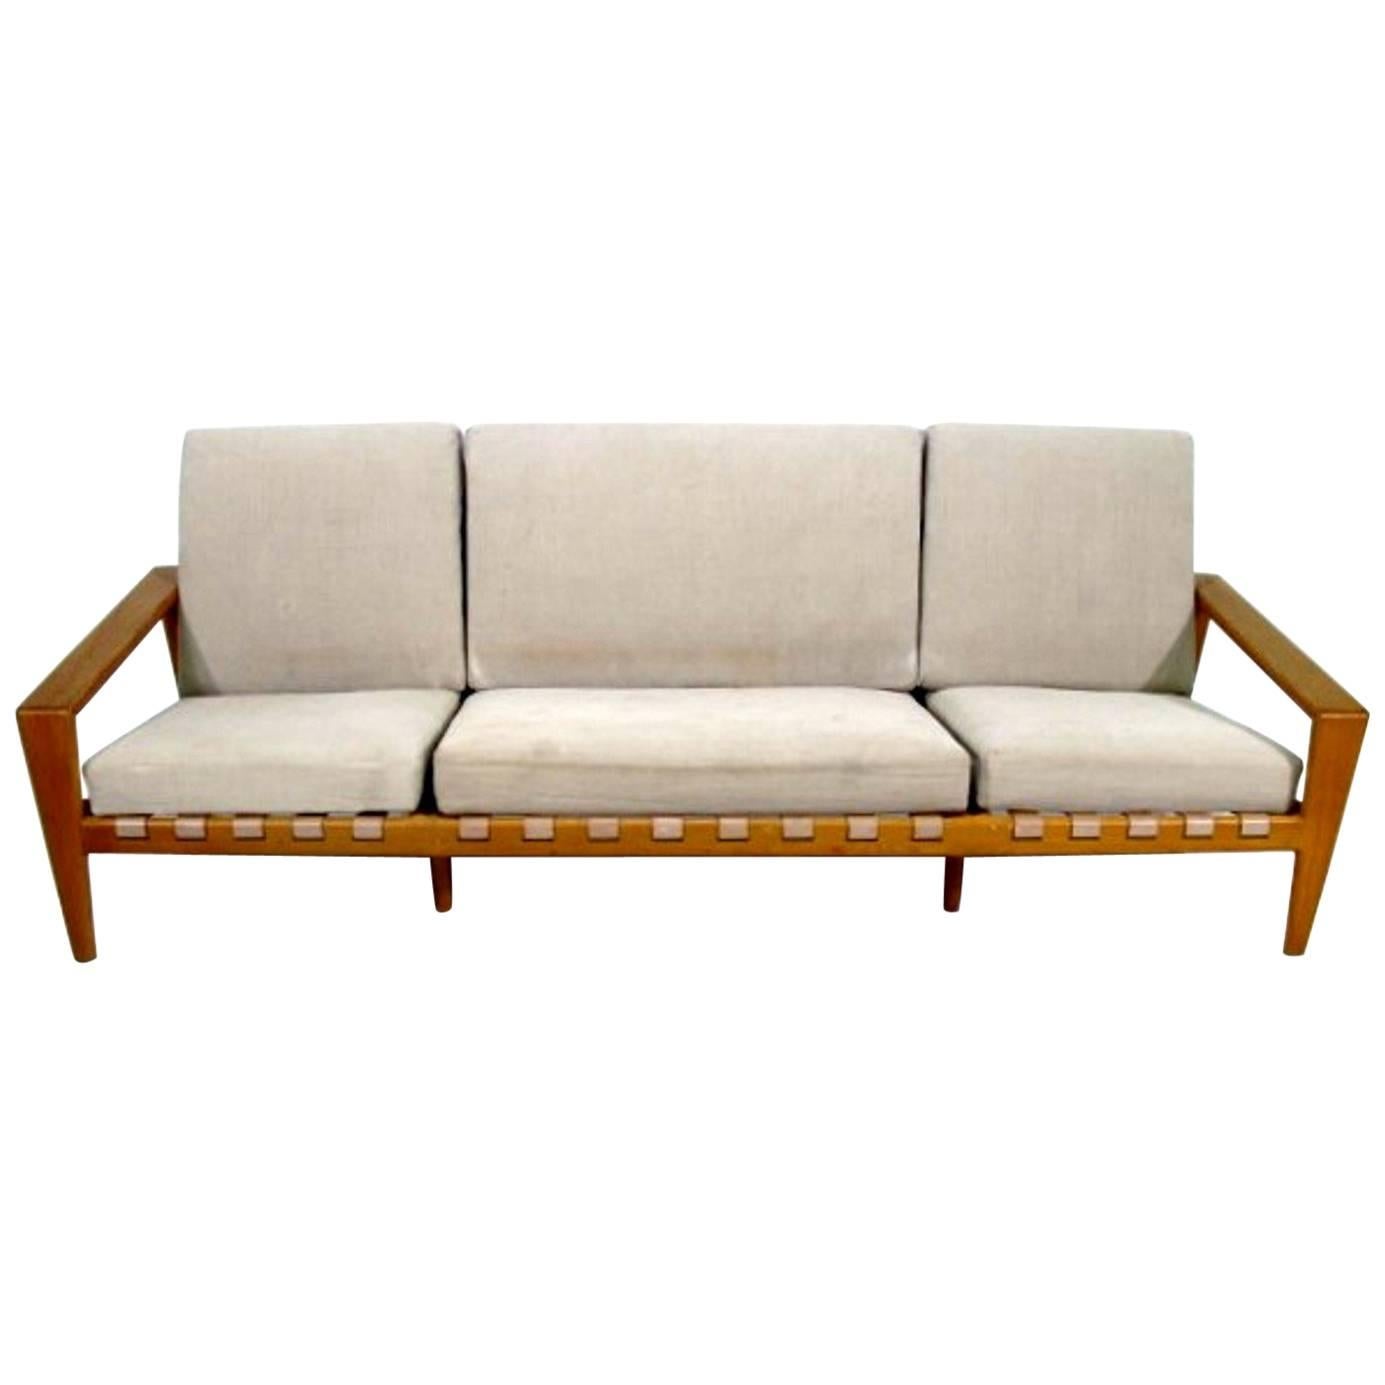 Scandinavian Modern Sofa "Bodö" Designed by Svante Skogh for AB Hjertquist & Co For Sale